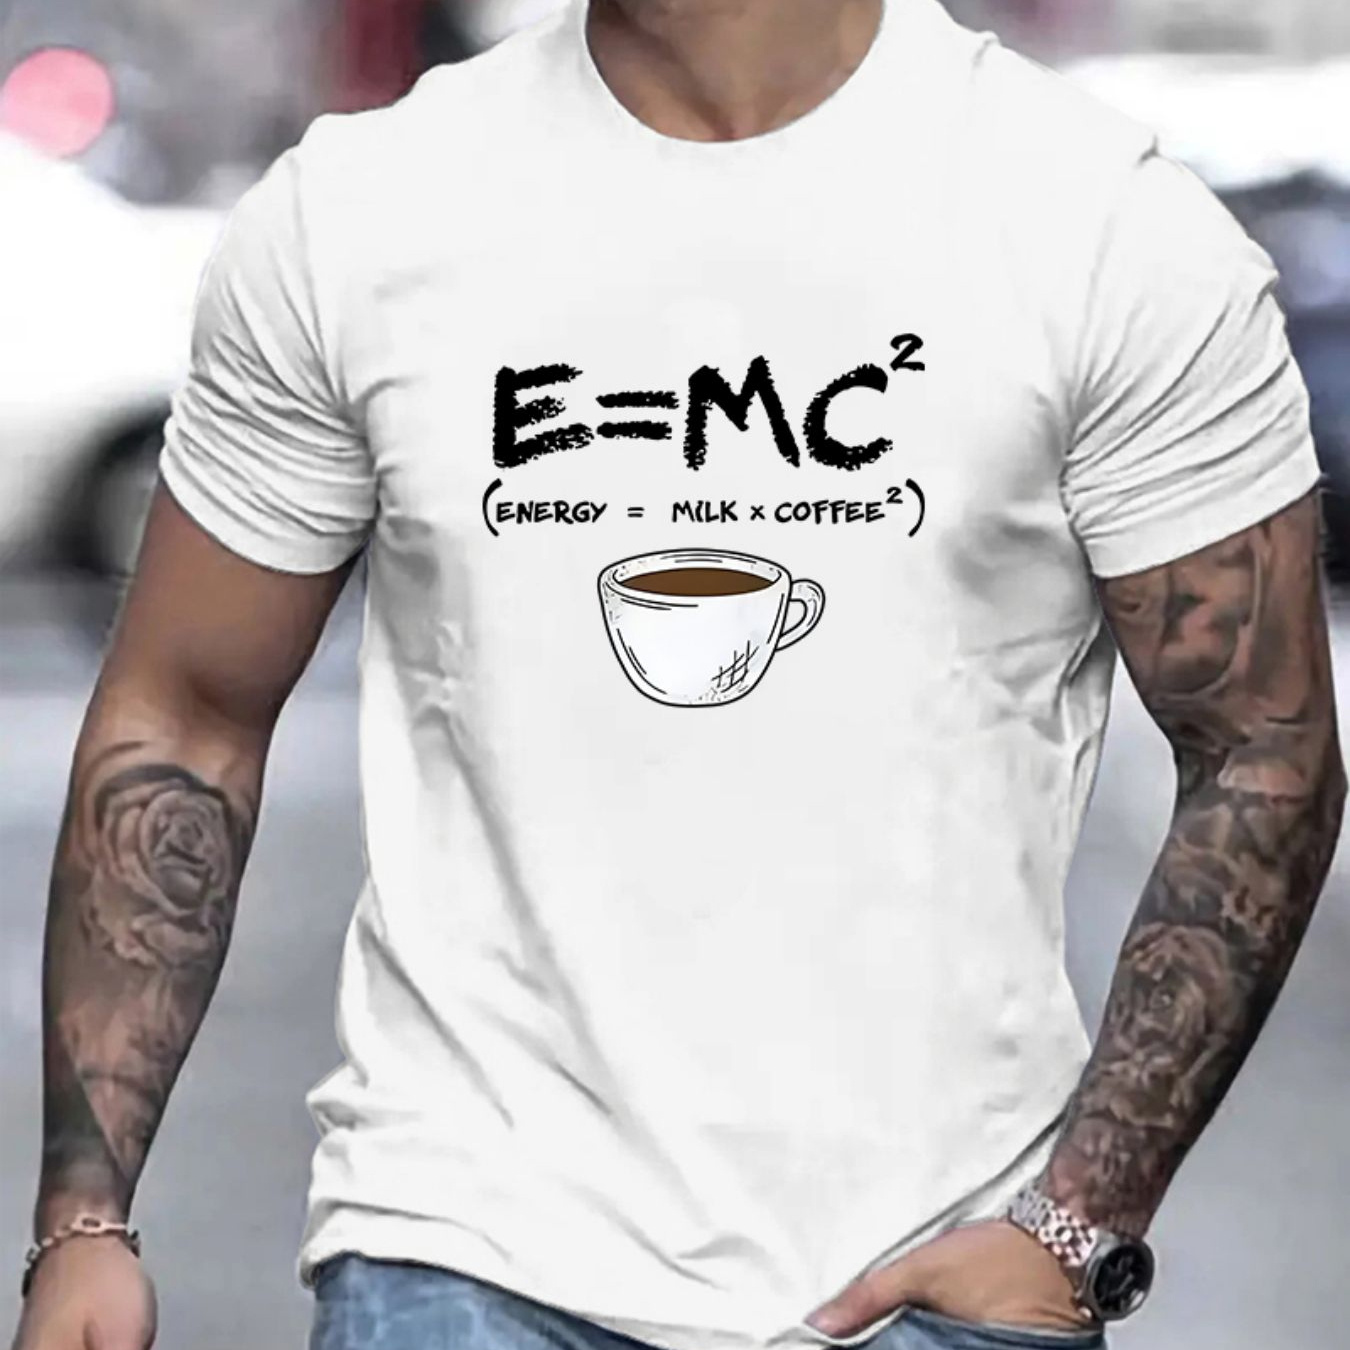 

Creative Coffee Formula Print Tee Shirt, Tees For Men, Casual Short Sleeve T-shirt For Summer